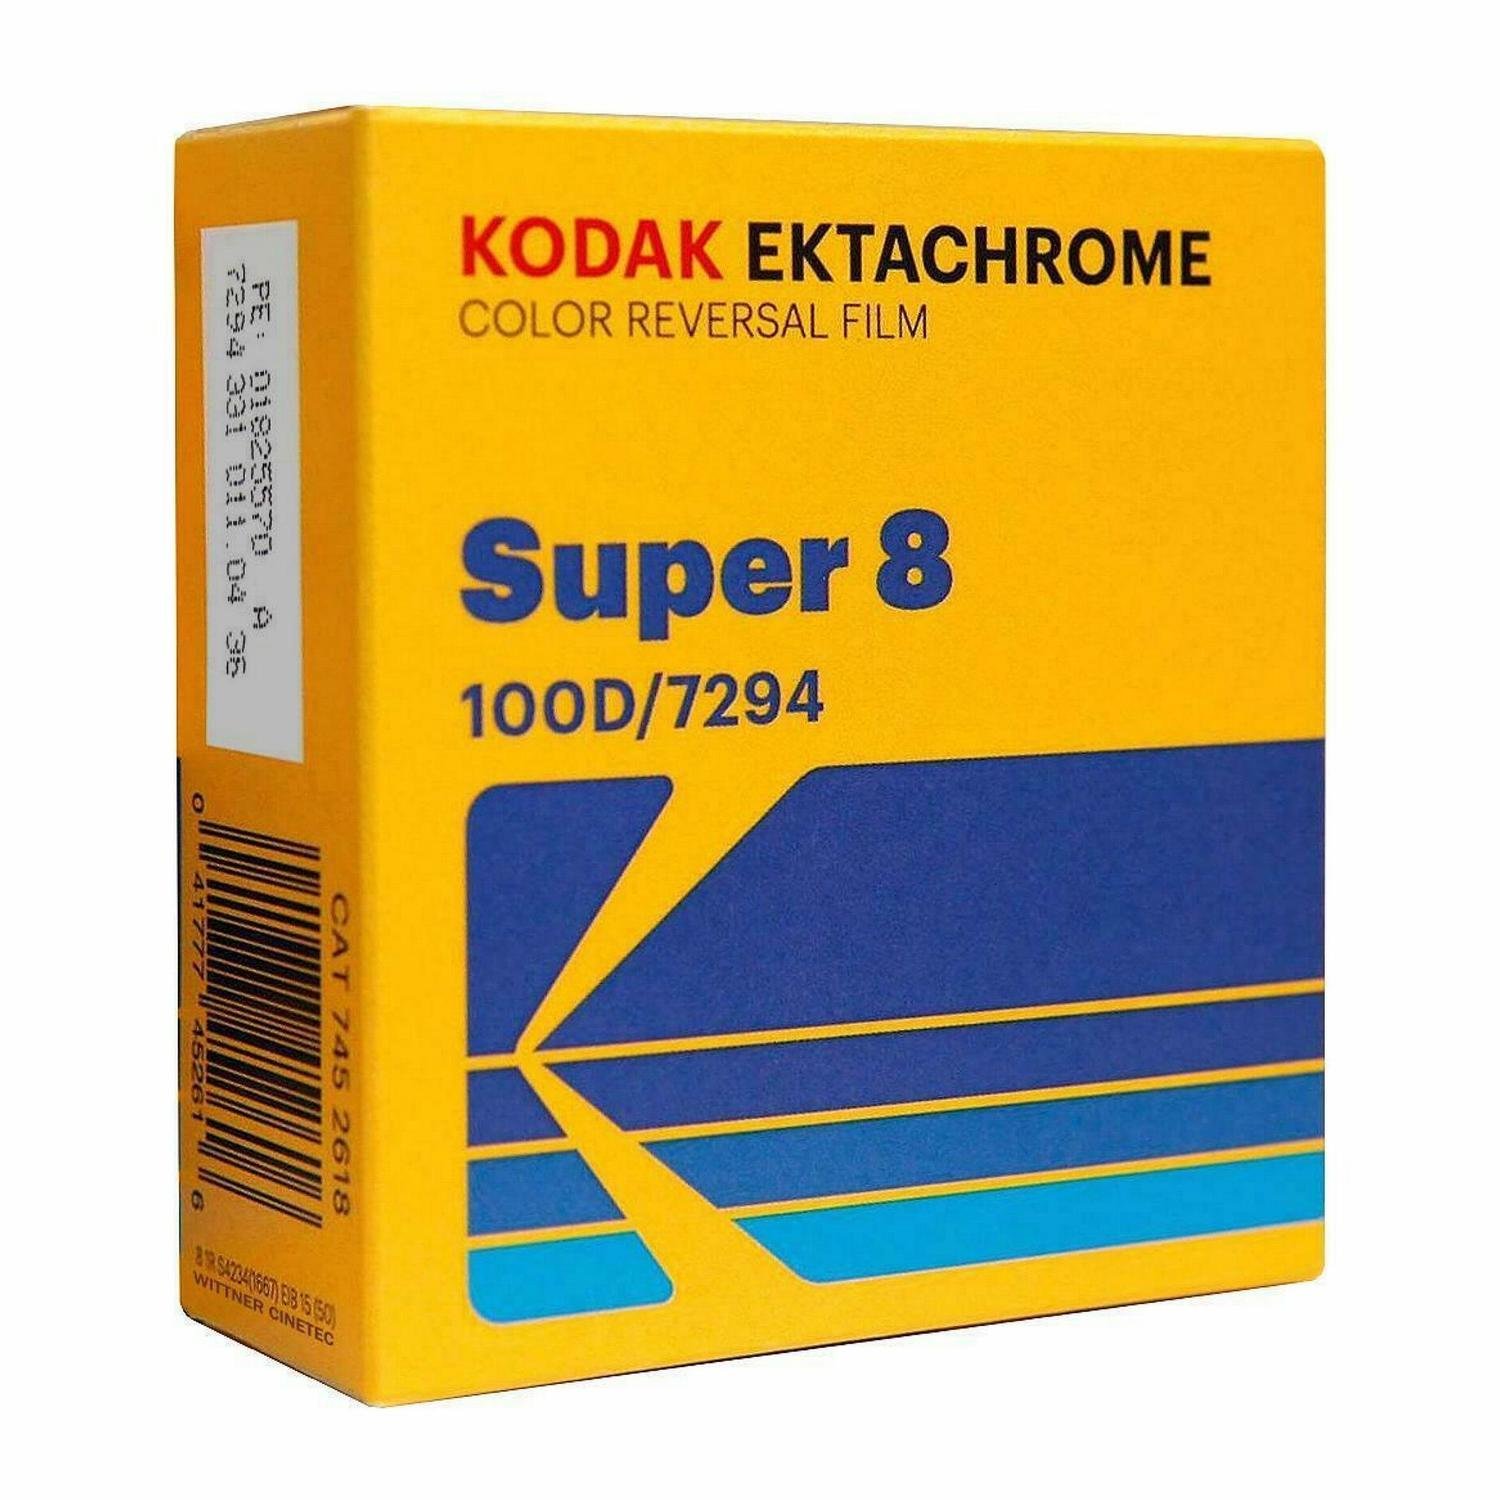 Filme KODAK EKTACHROME Super 8 50ft 100D/7294 - RunnerFilmes